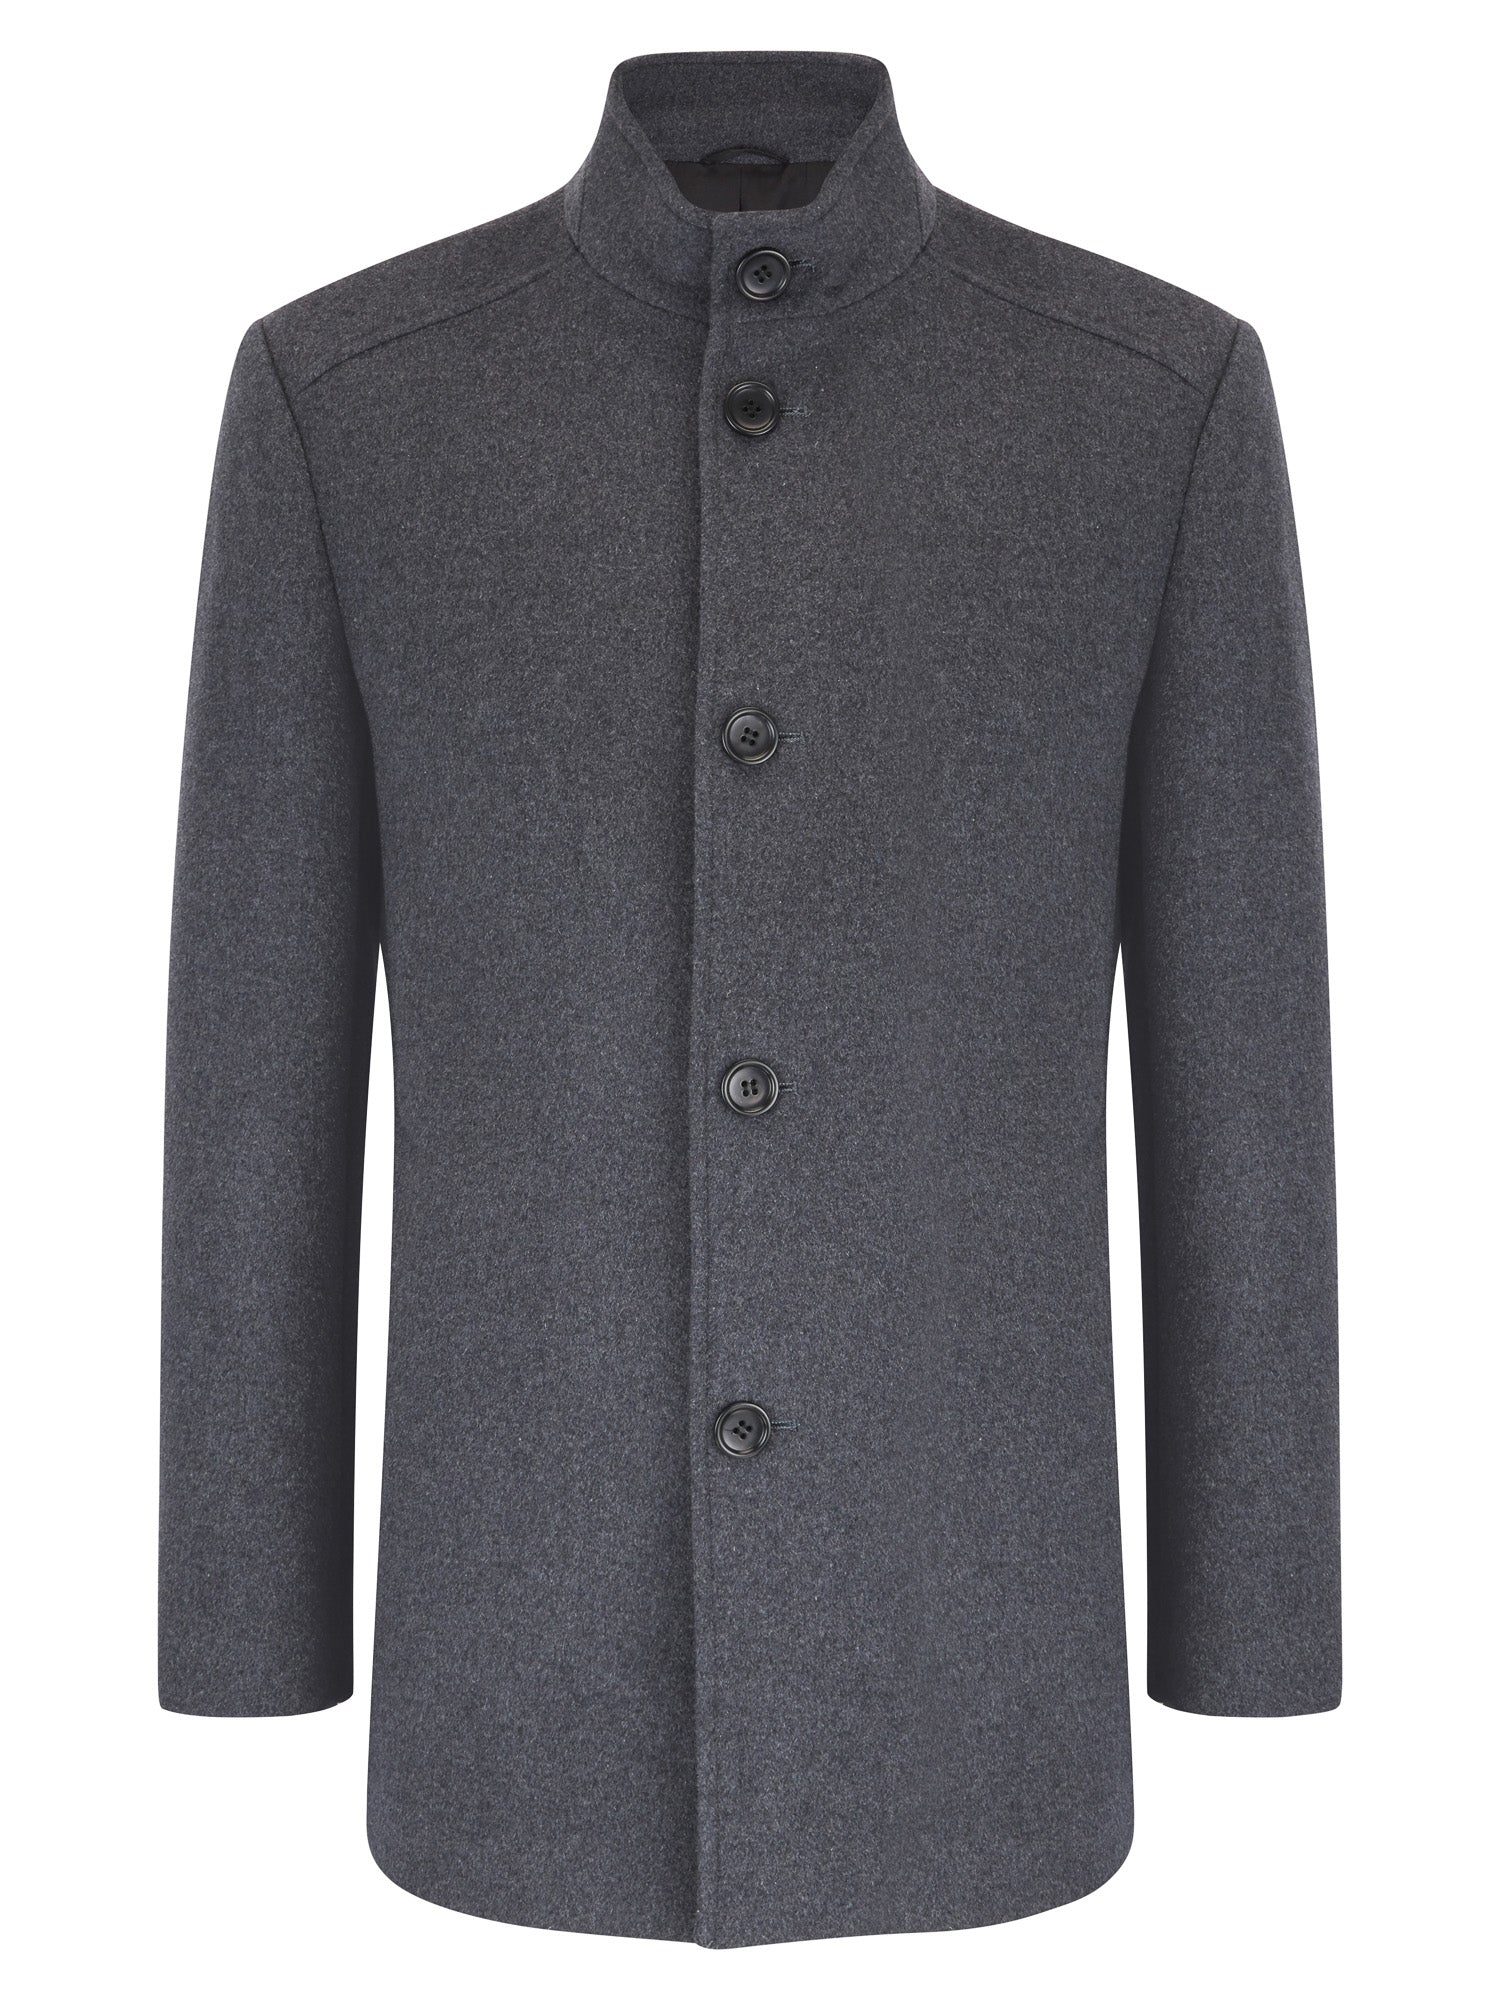 Daniel Grahame ... Watson Tailored Coat - Grey (206/07)